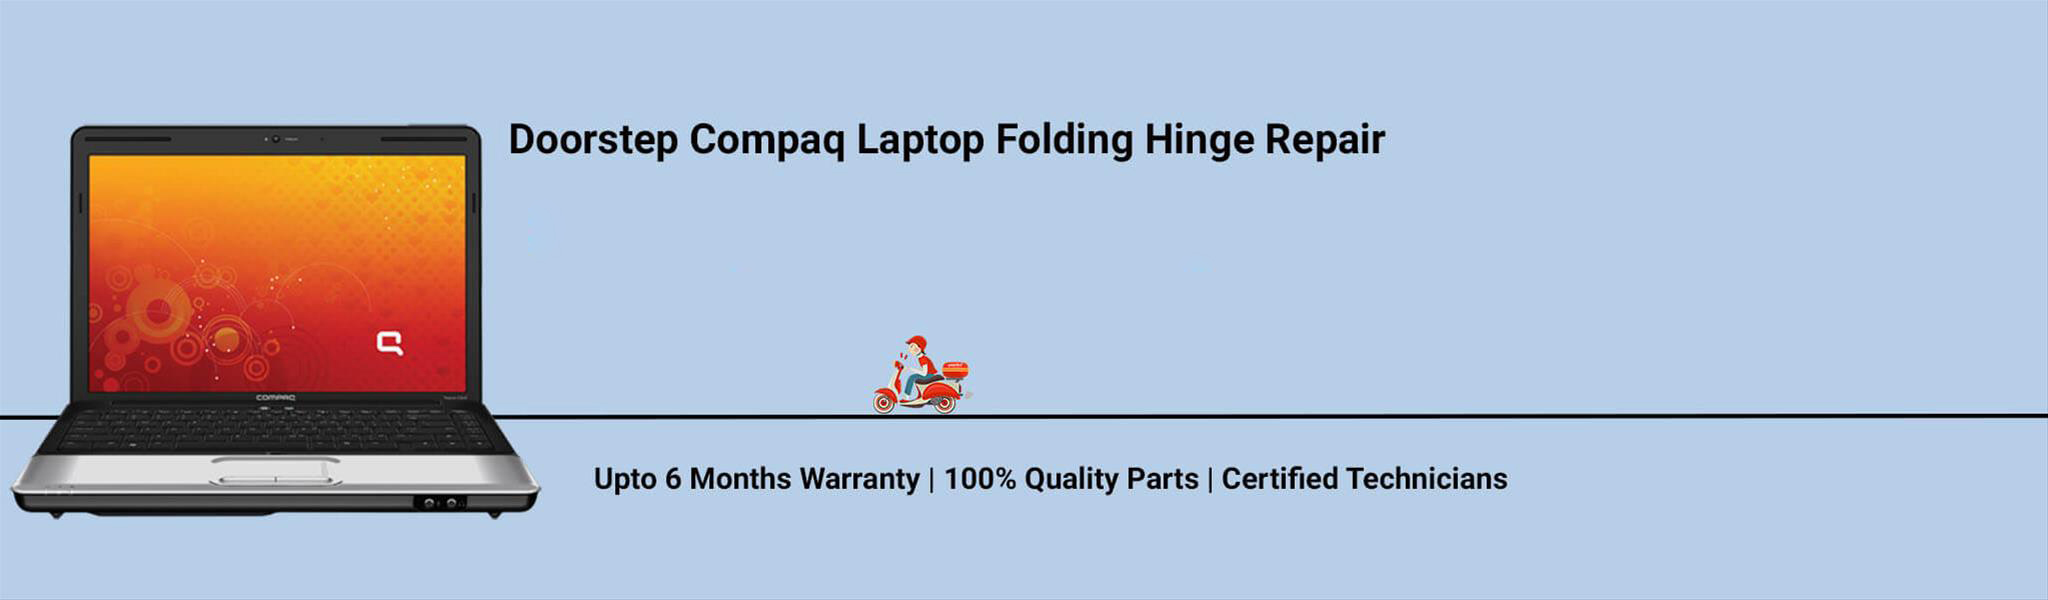 compaq-laptop-folding-hinge-repair.jpg